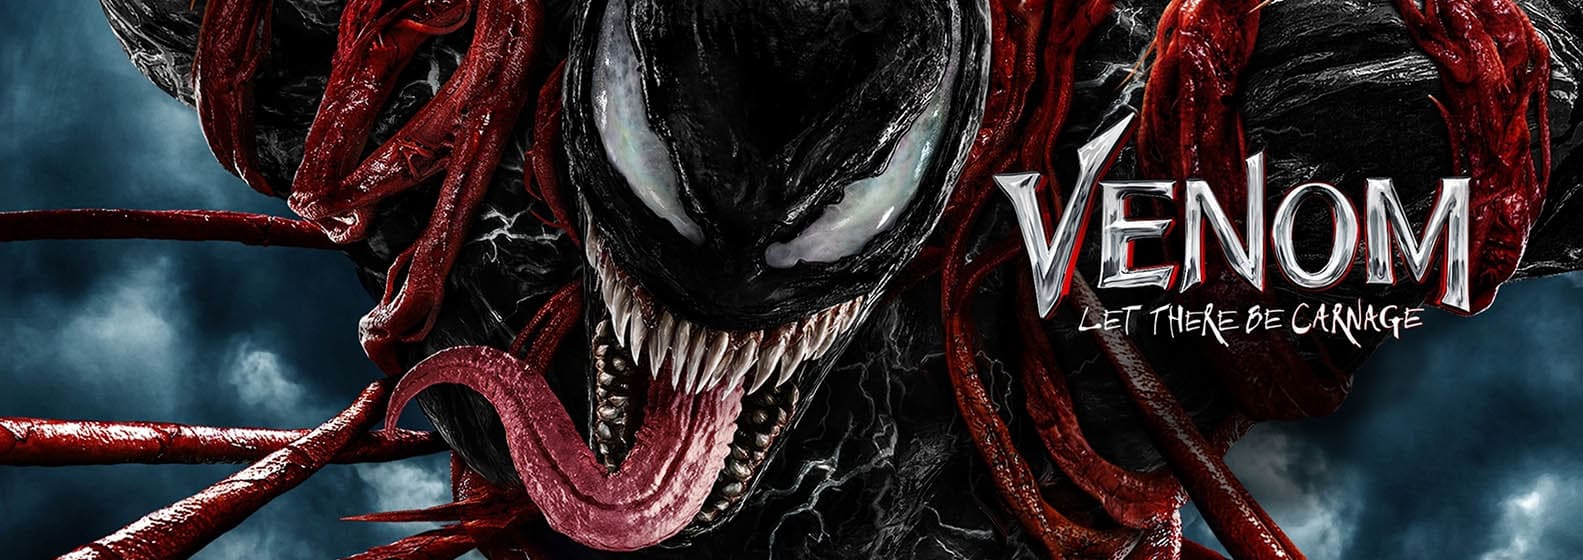 Venom: Let There Be Carnage - Header Image